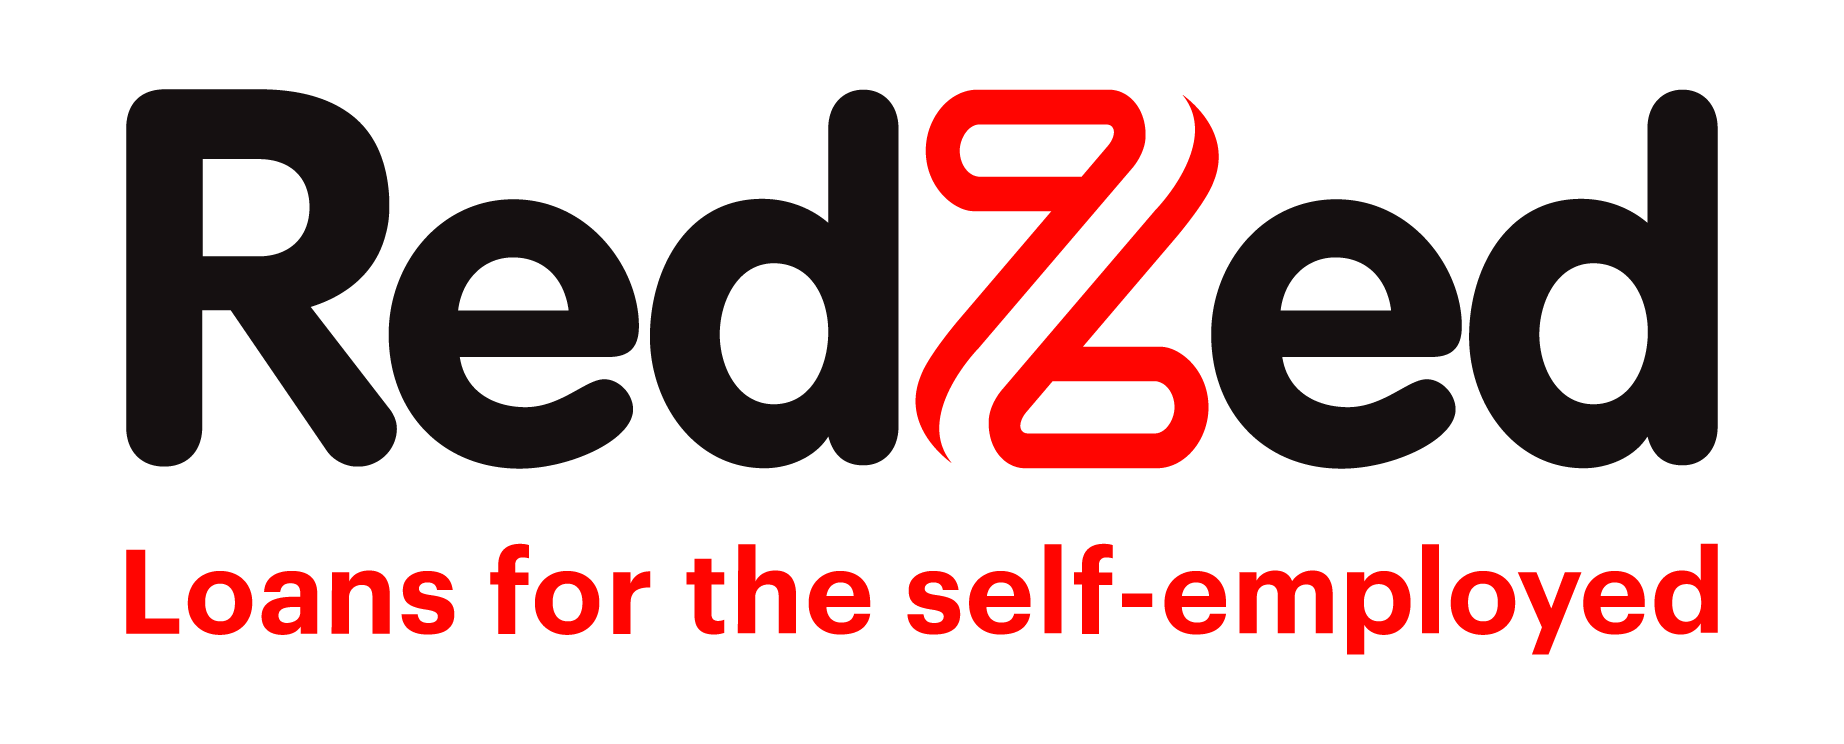 2023 supporter logos, RedZed. Loans for the self-employed